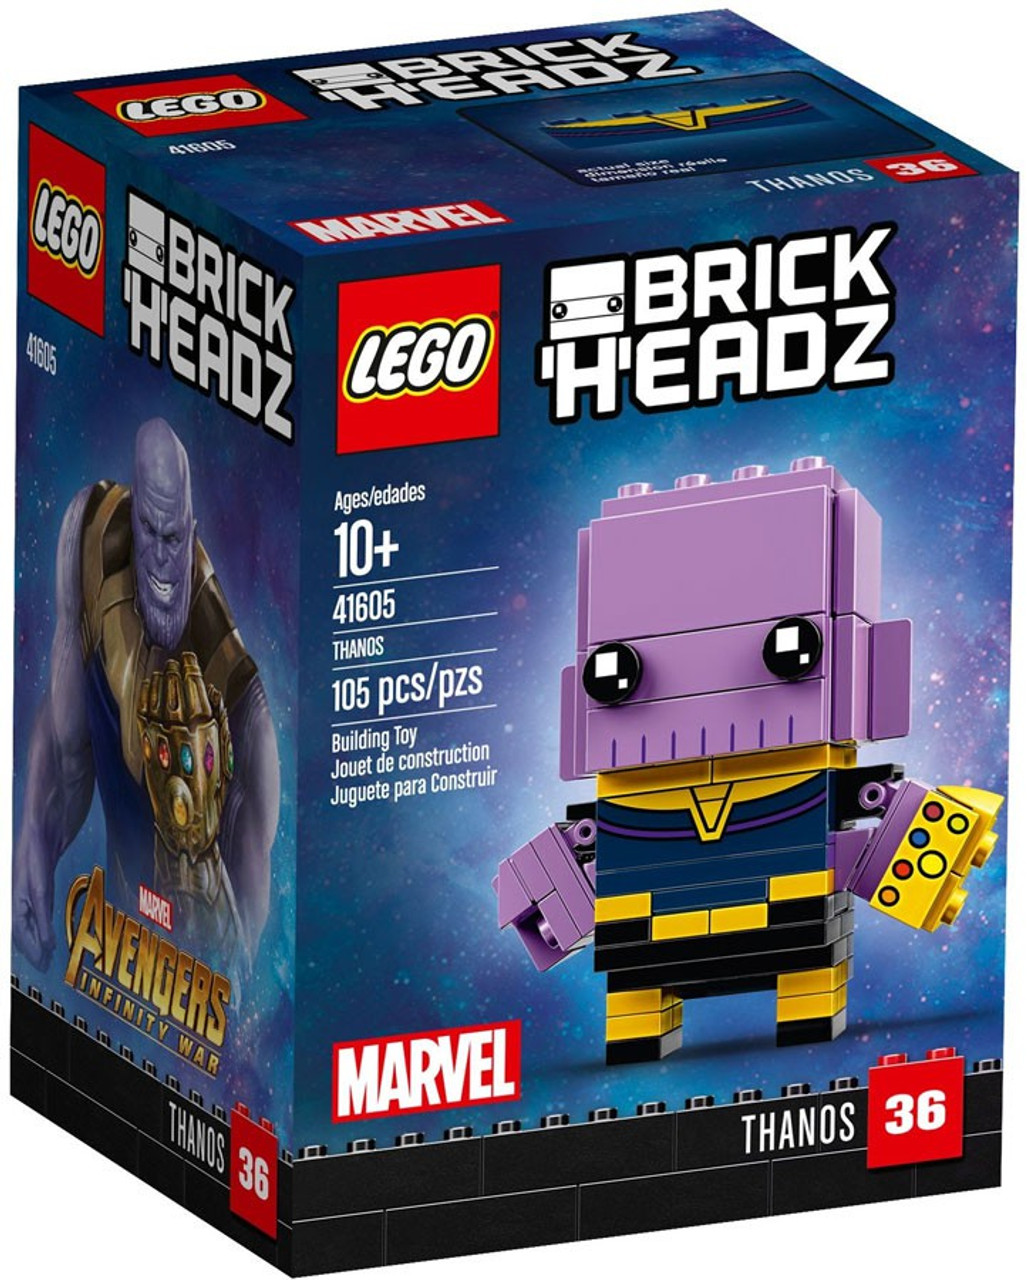 Image result for lego marvel thanos brick head